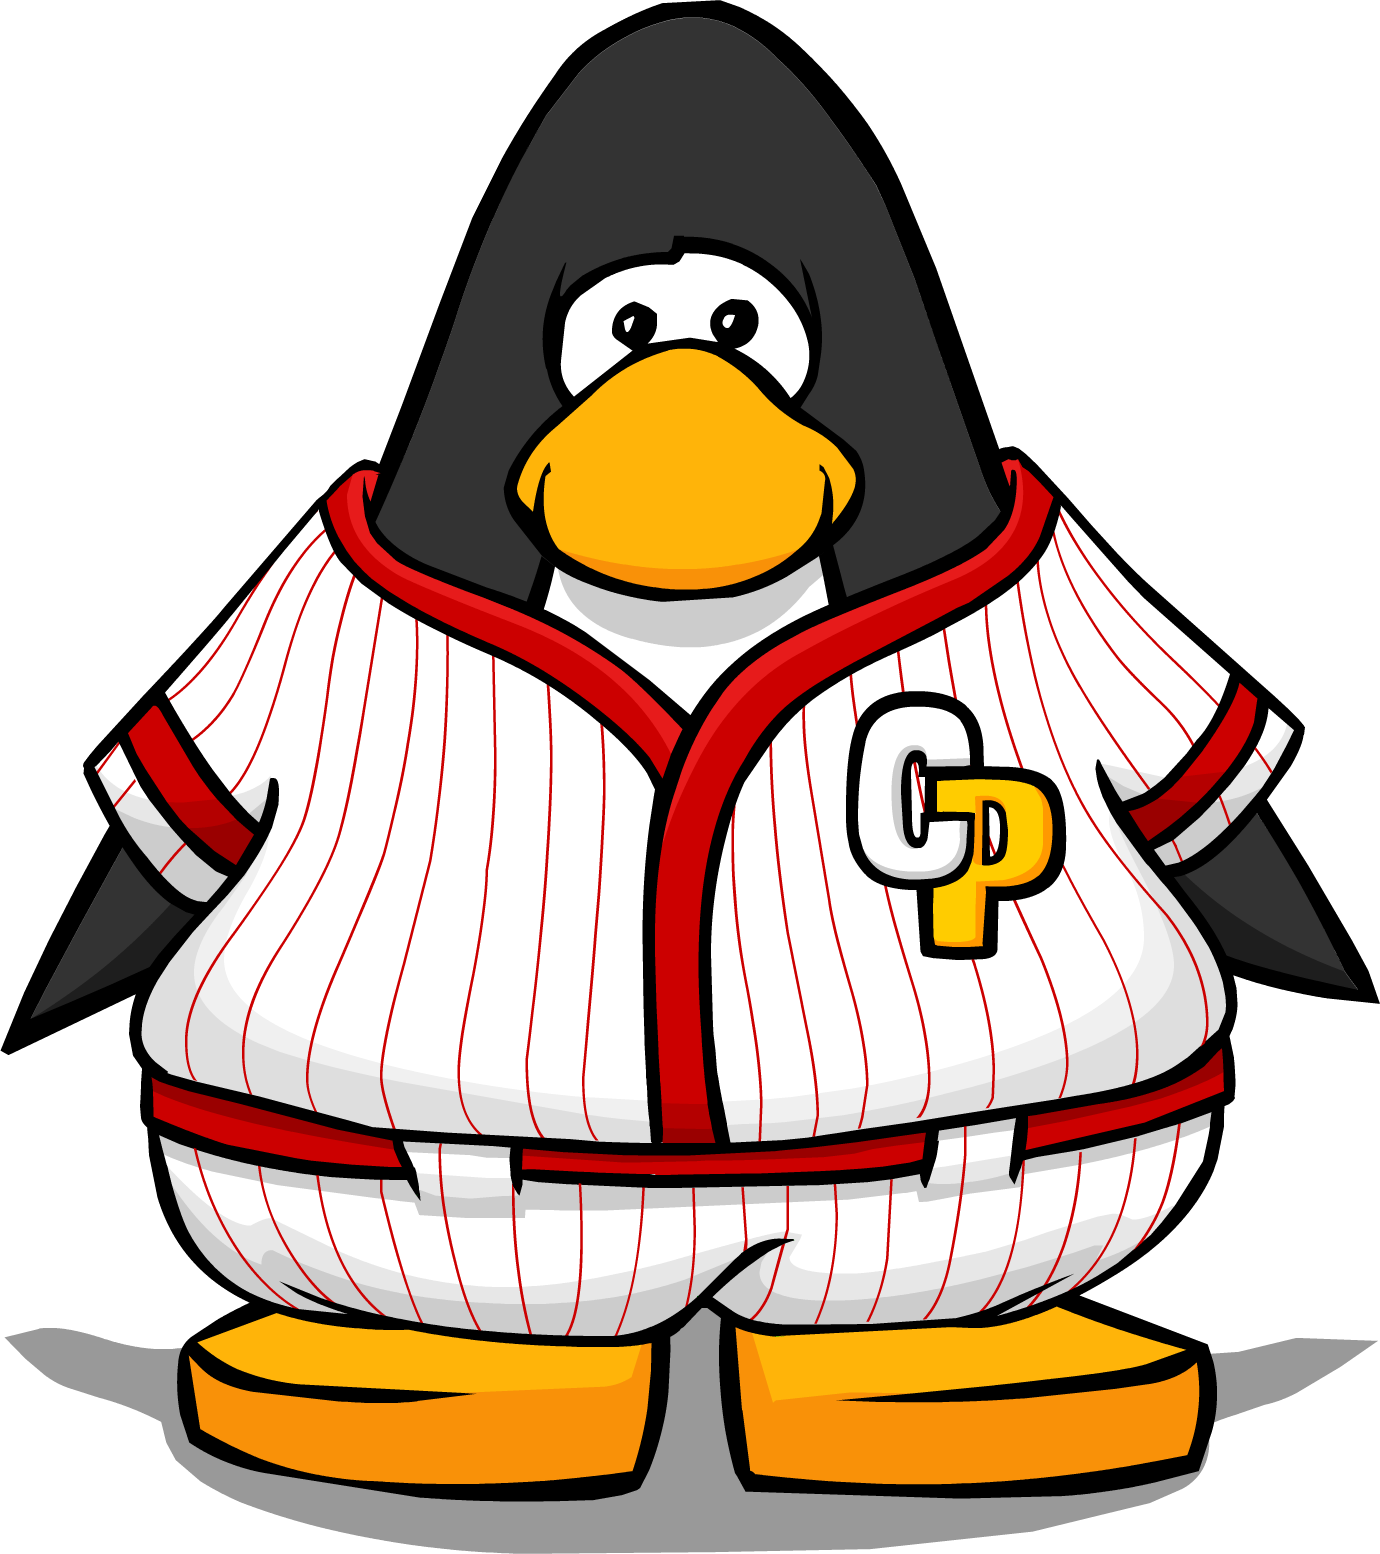 Red Baseball Uniform On A Player Card - Club Penguin Black Belt (1380x1554)